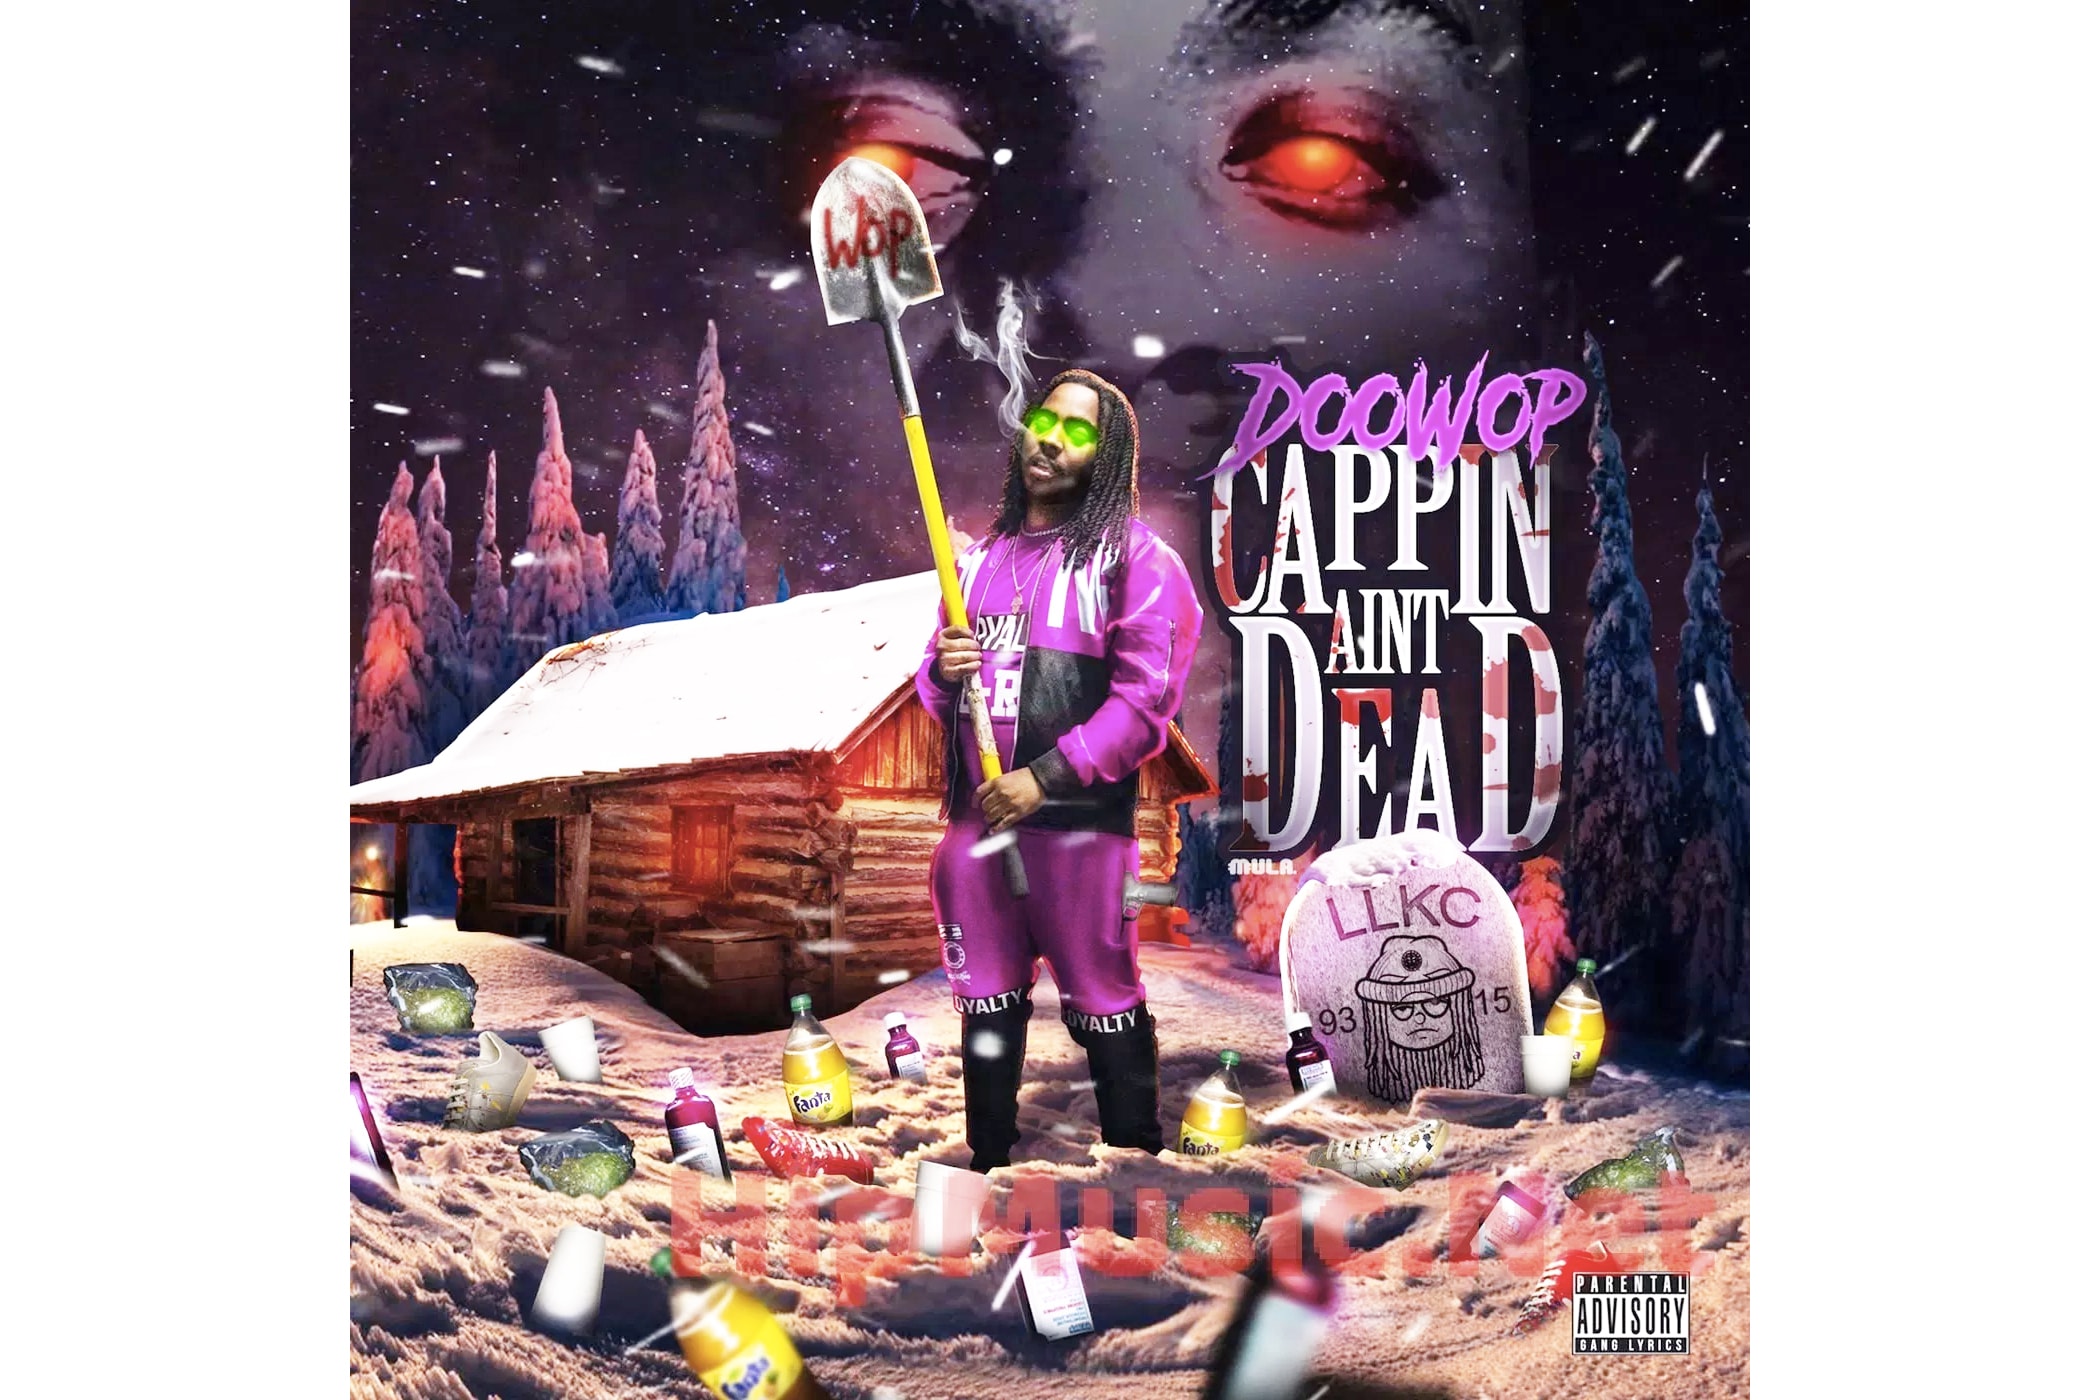 DooWop "Cap Flow" Feat. Lil Uzi Vert Single Stream chief keef producer hip-hop chicago trap rap listen now 'Cappin’ Ain’t Dead' 